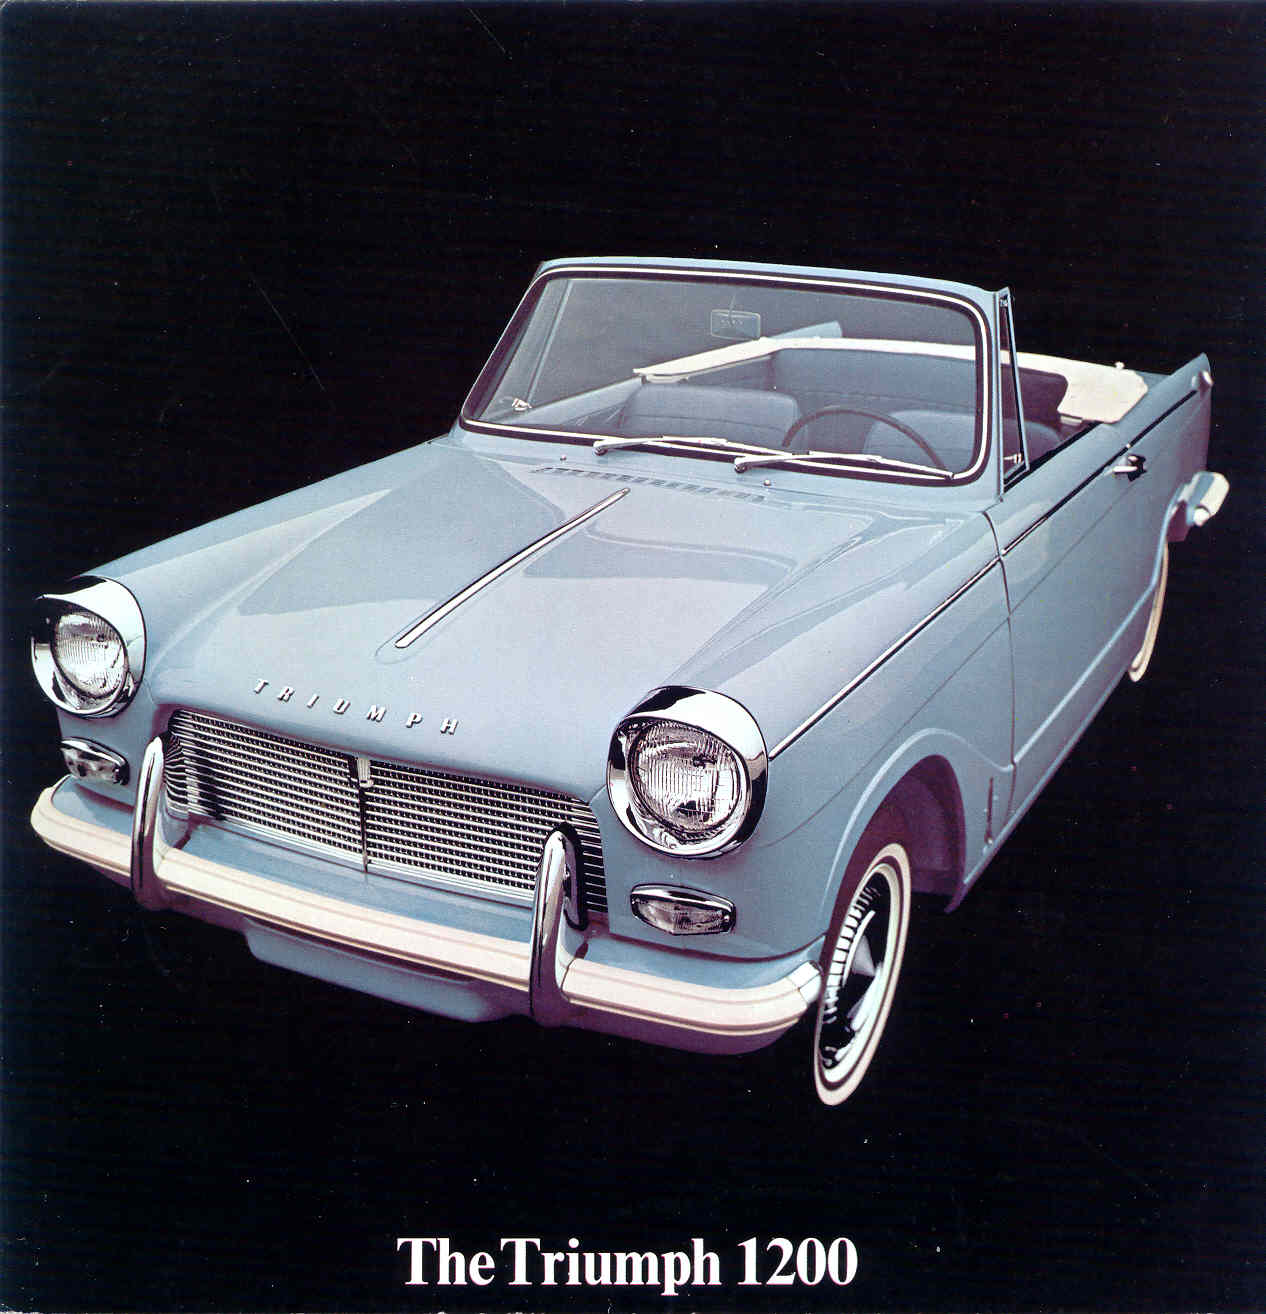 Triumph Herald 1200!